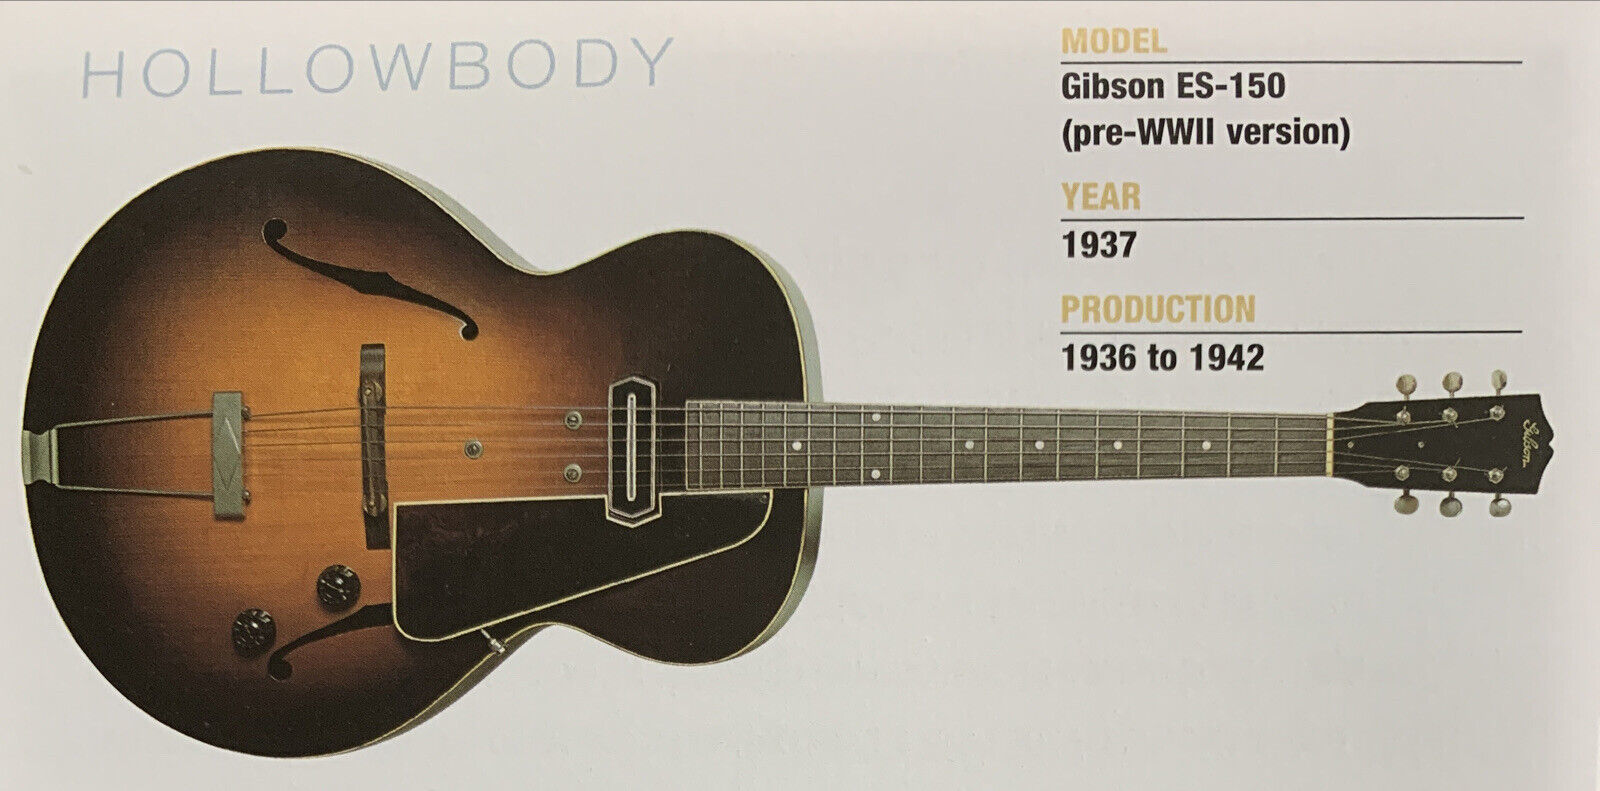 1937 Gibson ES-150 Hollow Body Guitar Fridge Magnet 5.25"x2.75" NEW - $3.84